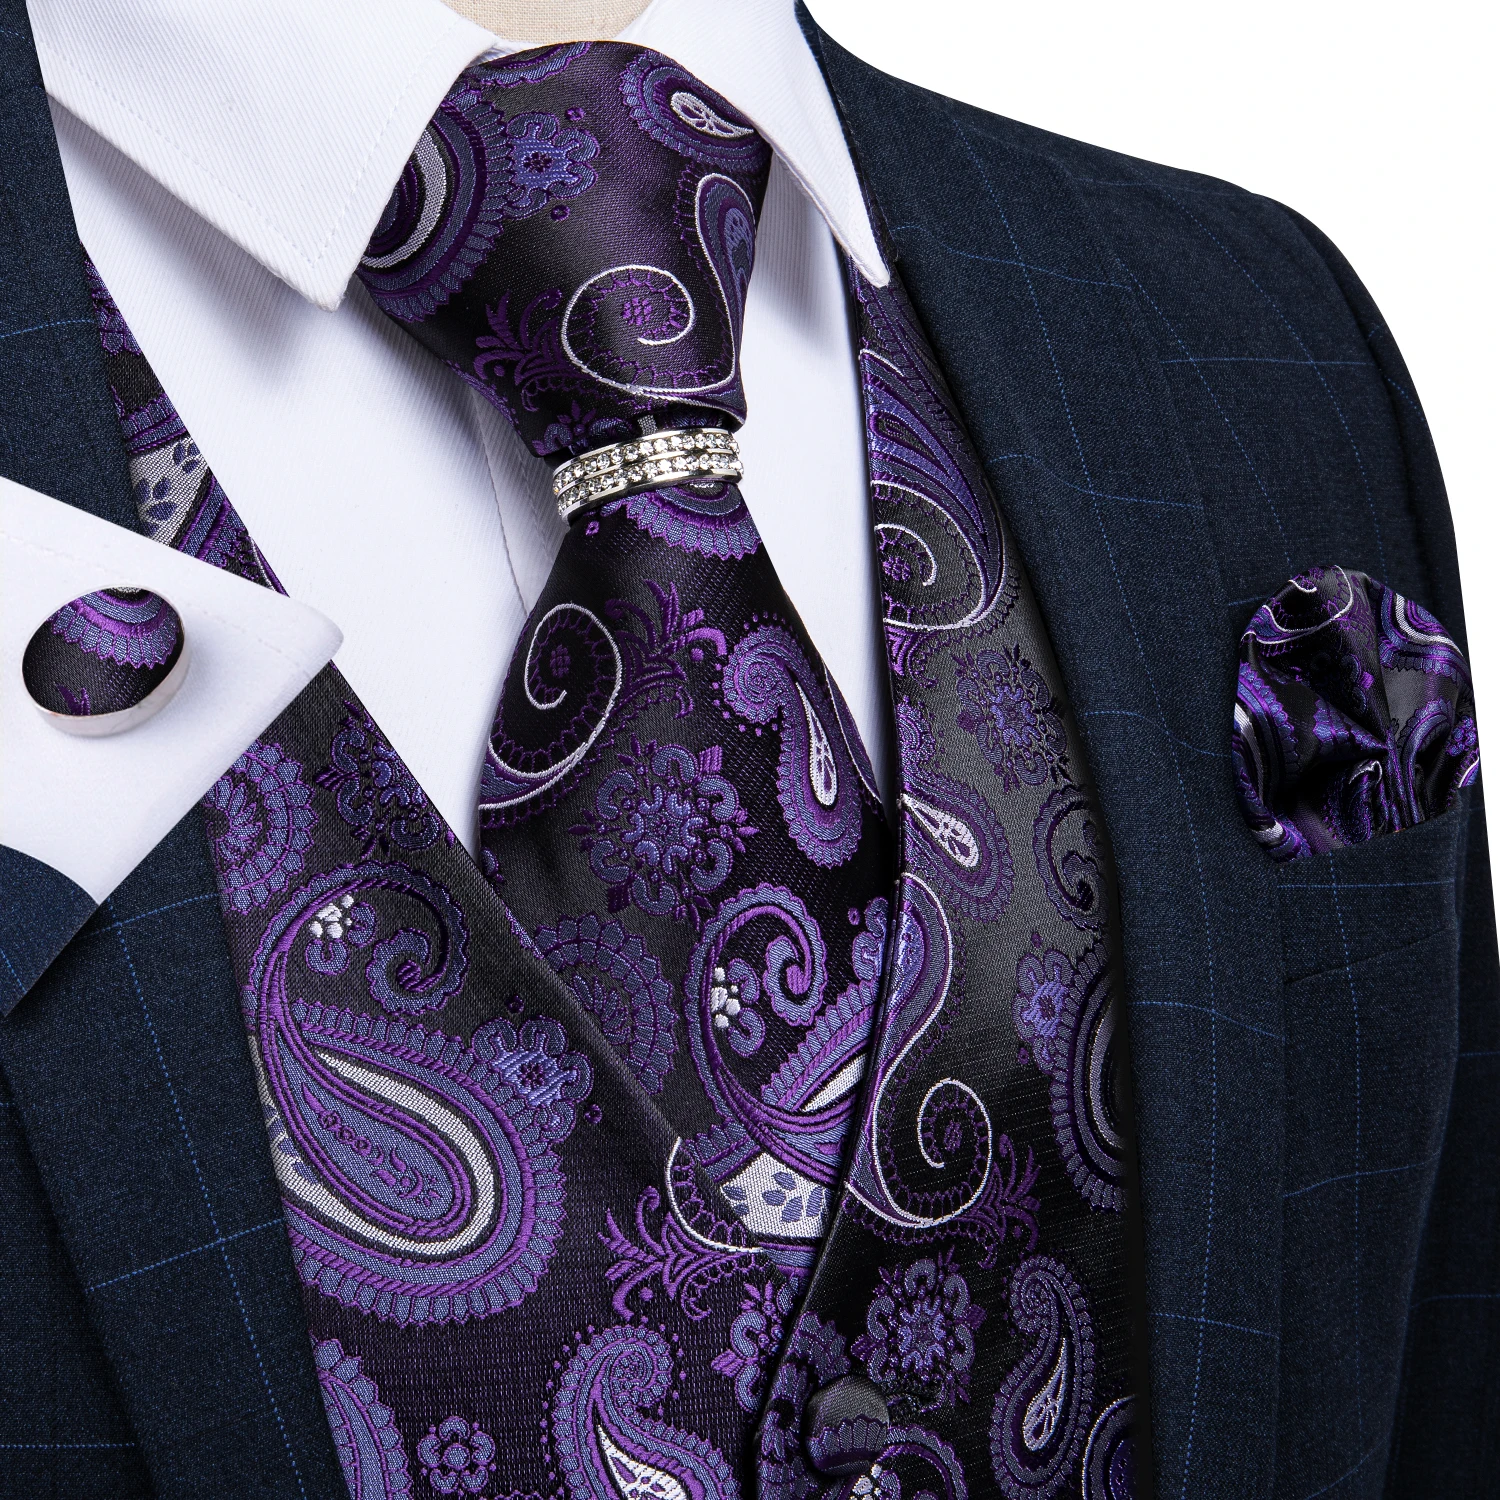 New Men's lavender vest Tuxedo Waistcoat self tie bow tie and hankie set 